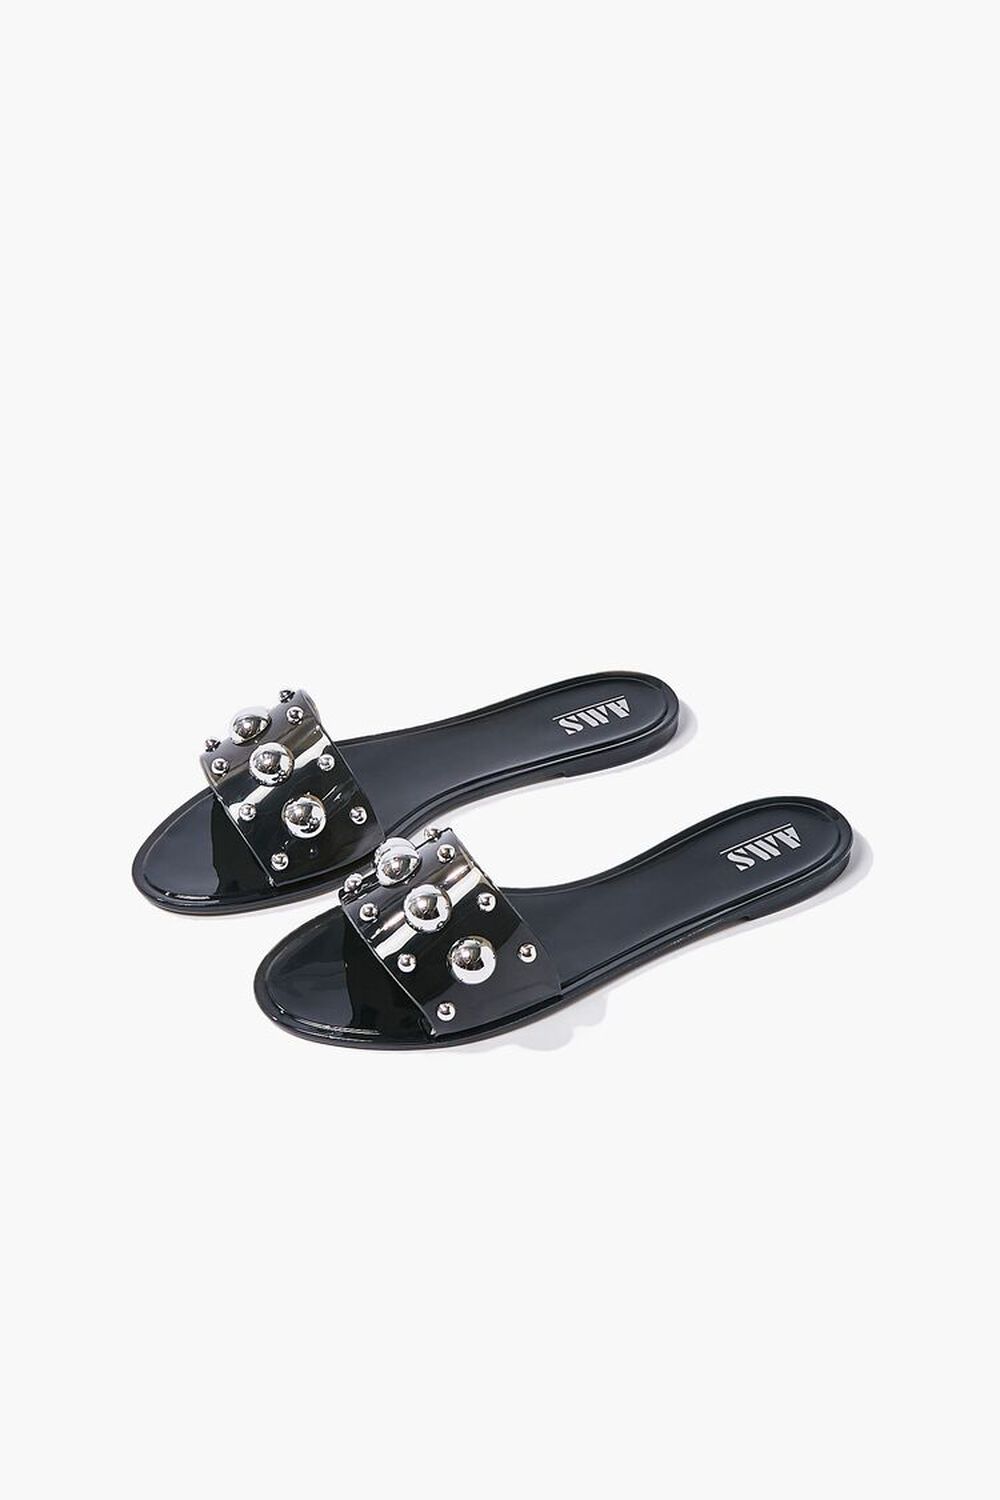 BLACK Studded Jelly Sandals, image 3